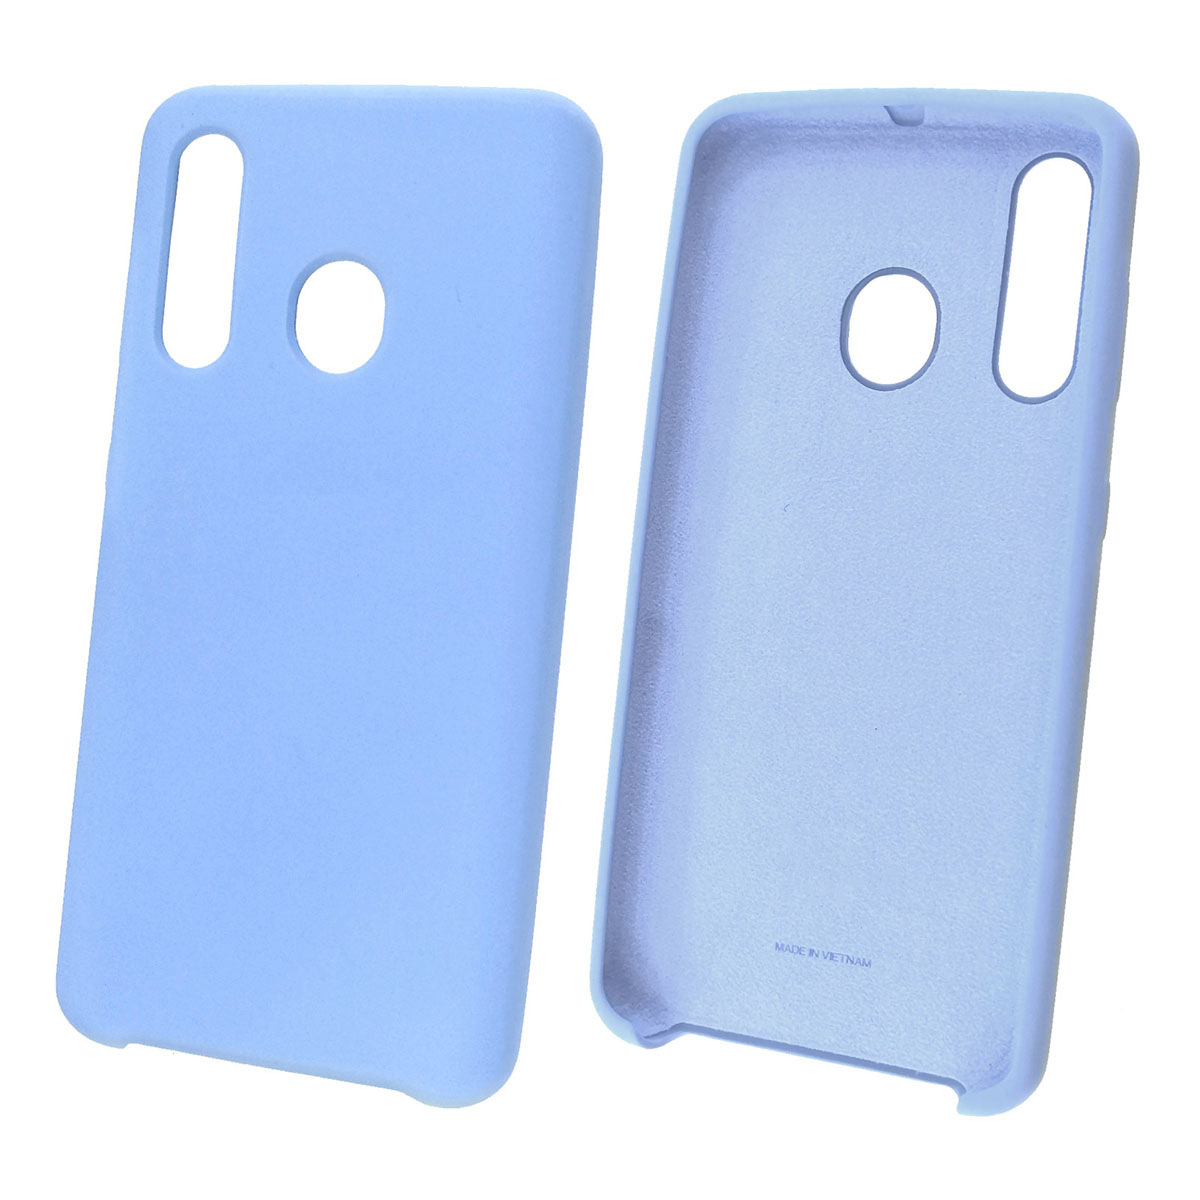 Чехол накладка Silicon Cover для SAMSUNG Galaxy A60 2019 (SM-A605), Galaxy M40 (SM-M405), силикон, бархат, цвет голубой.